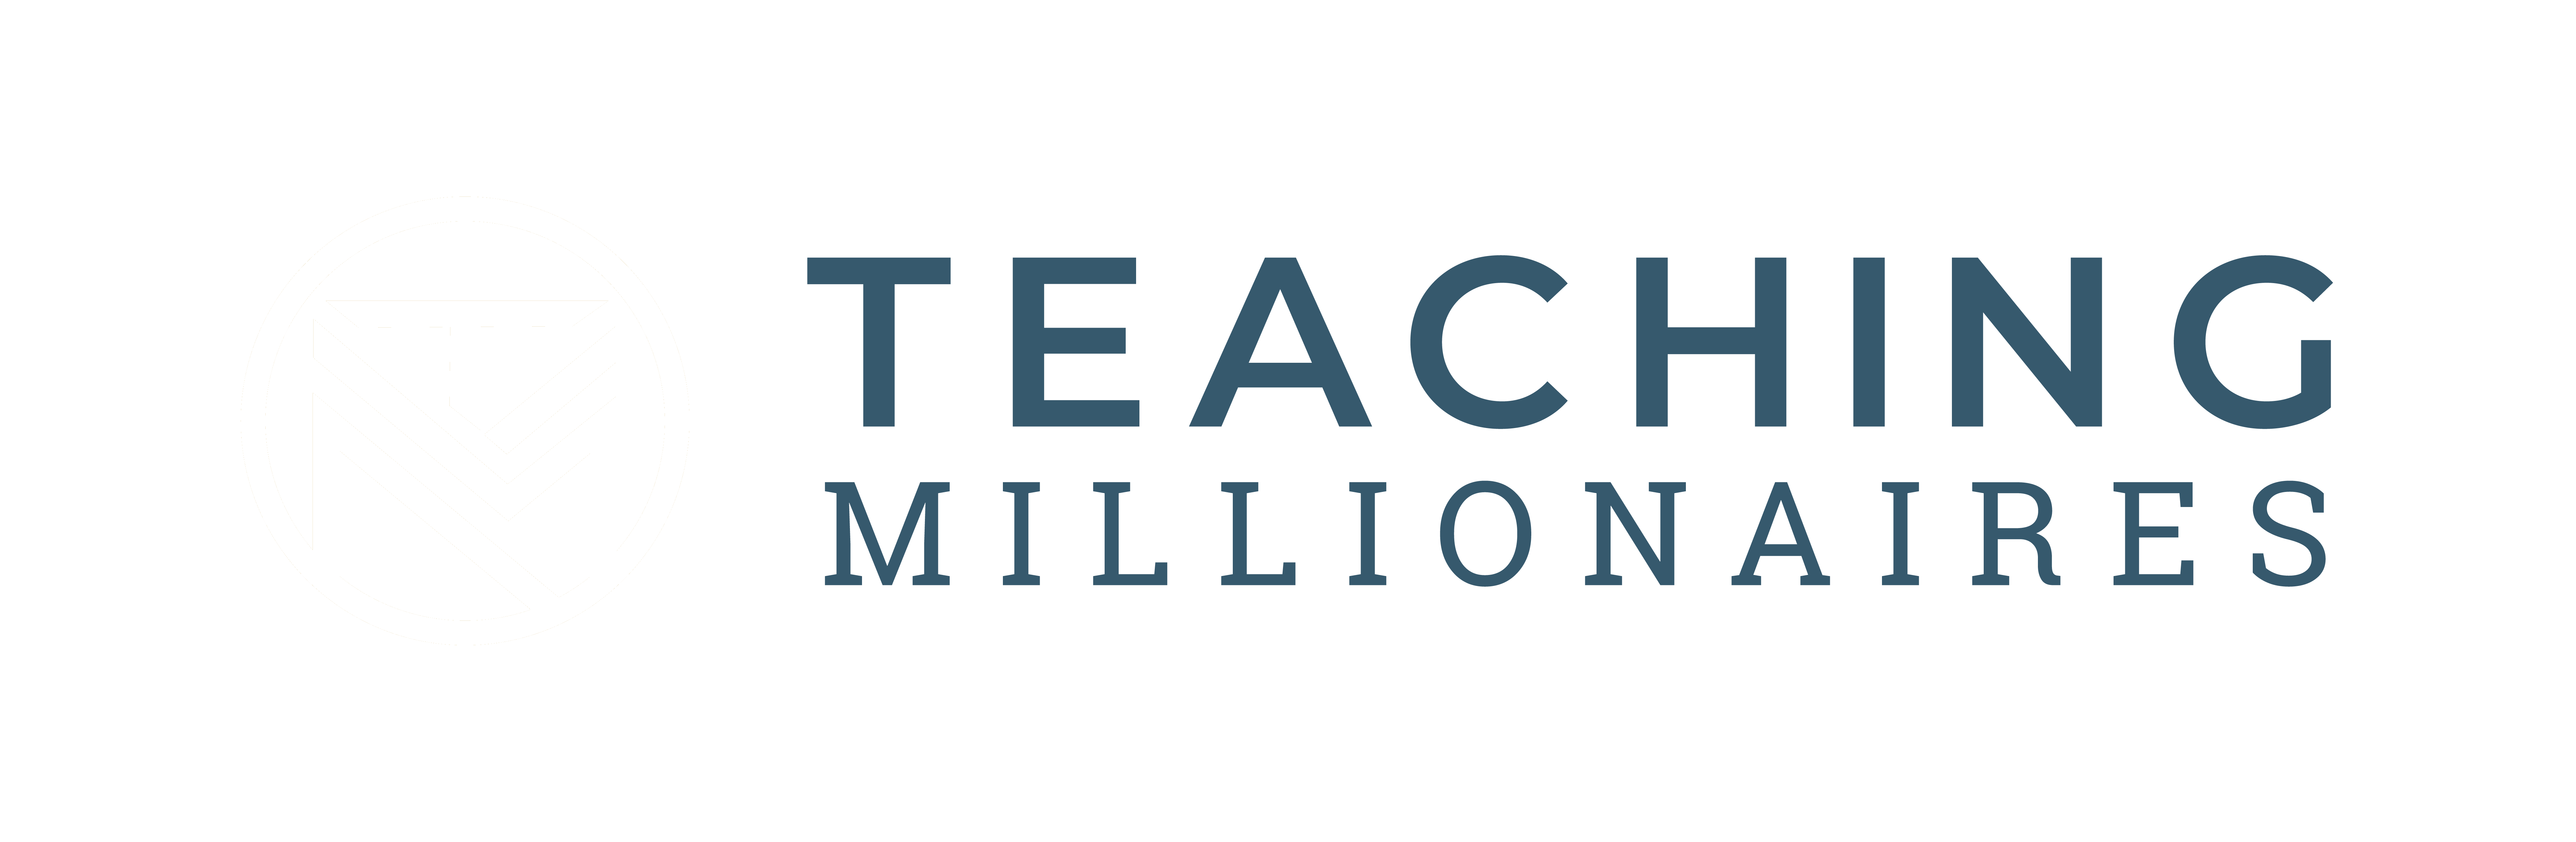 Teaching Millionaires